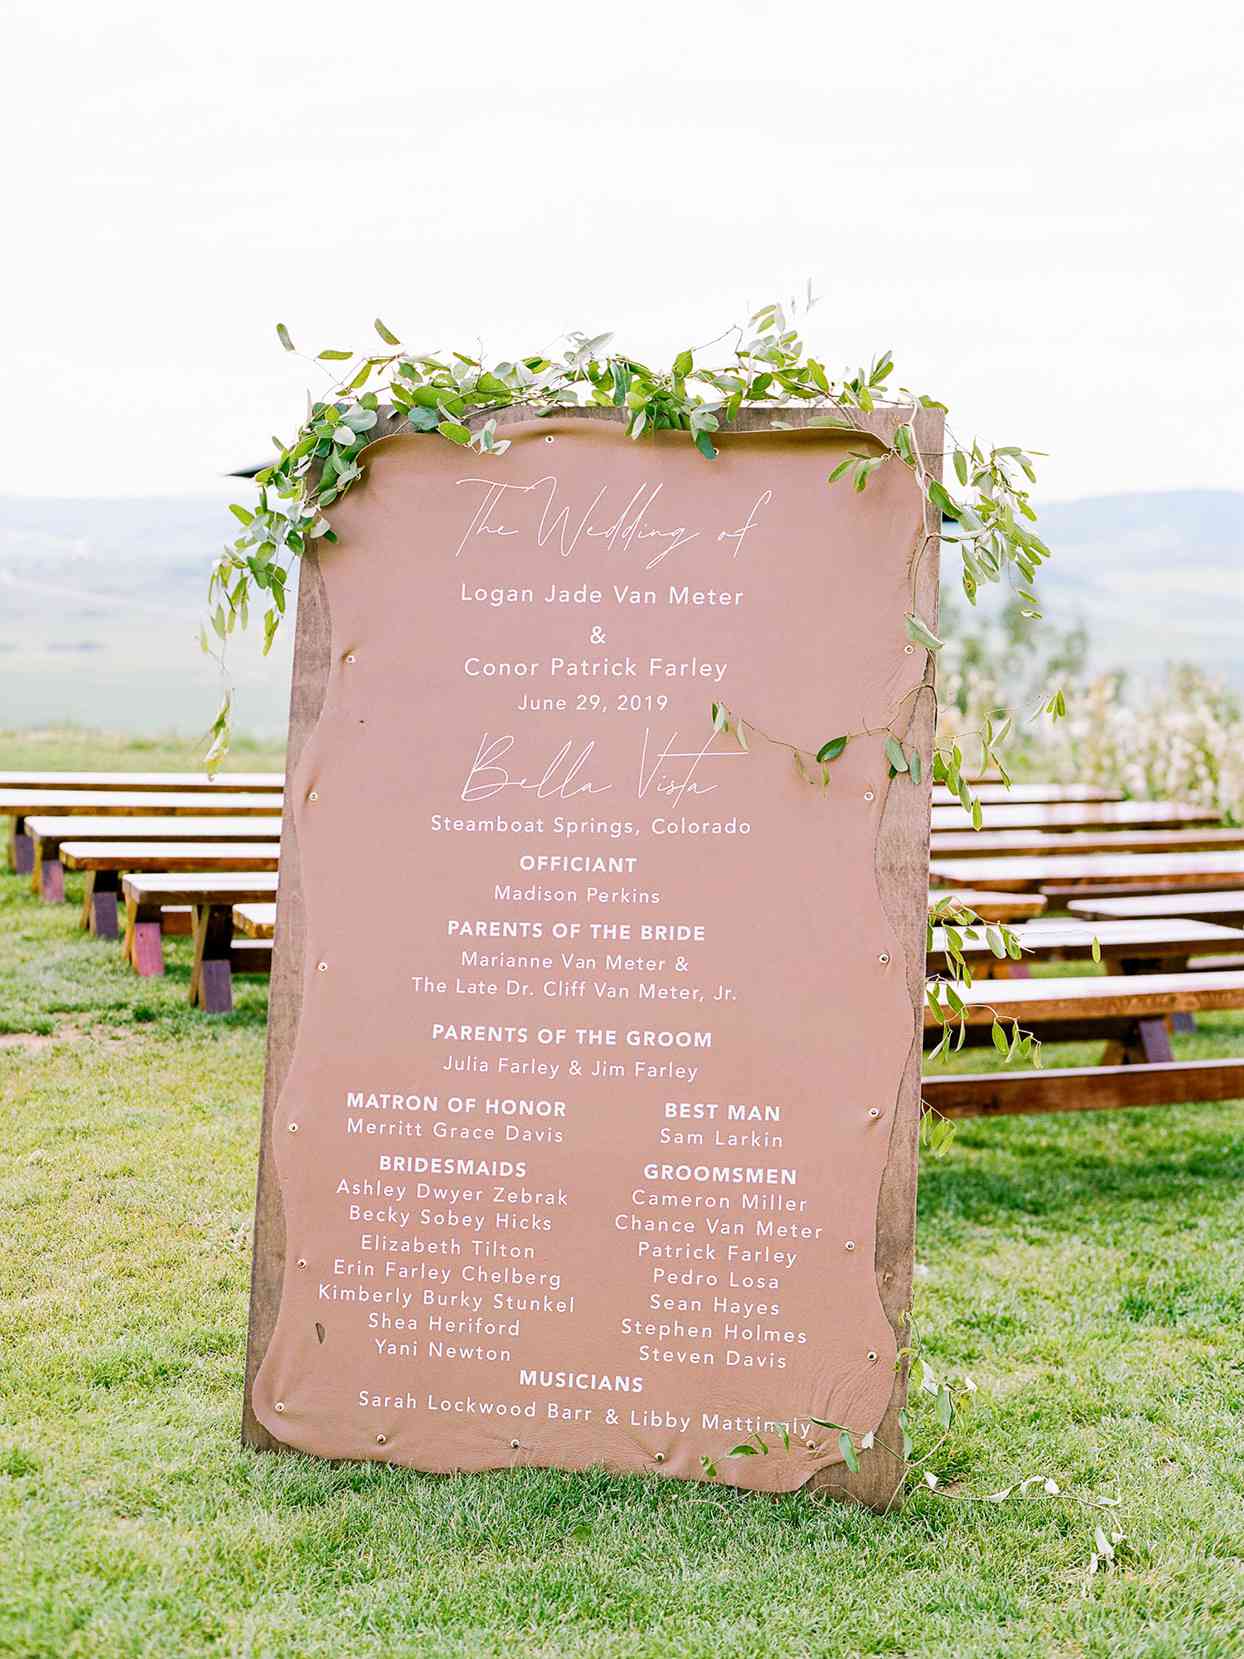 logan conor wedding ceremony program sign